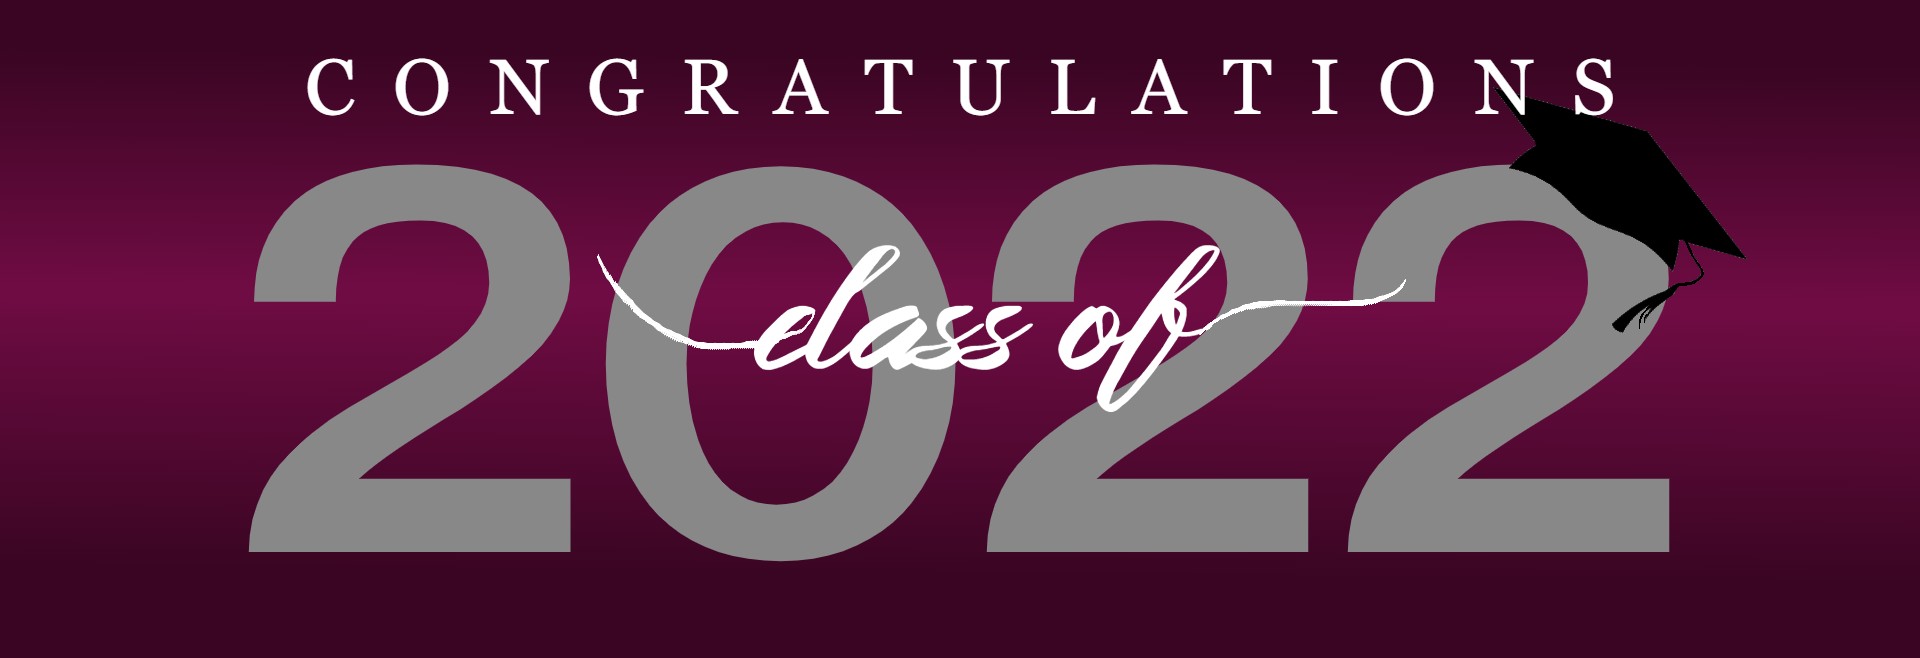 22 class graduation